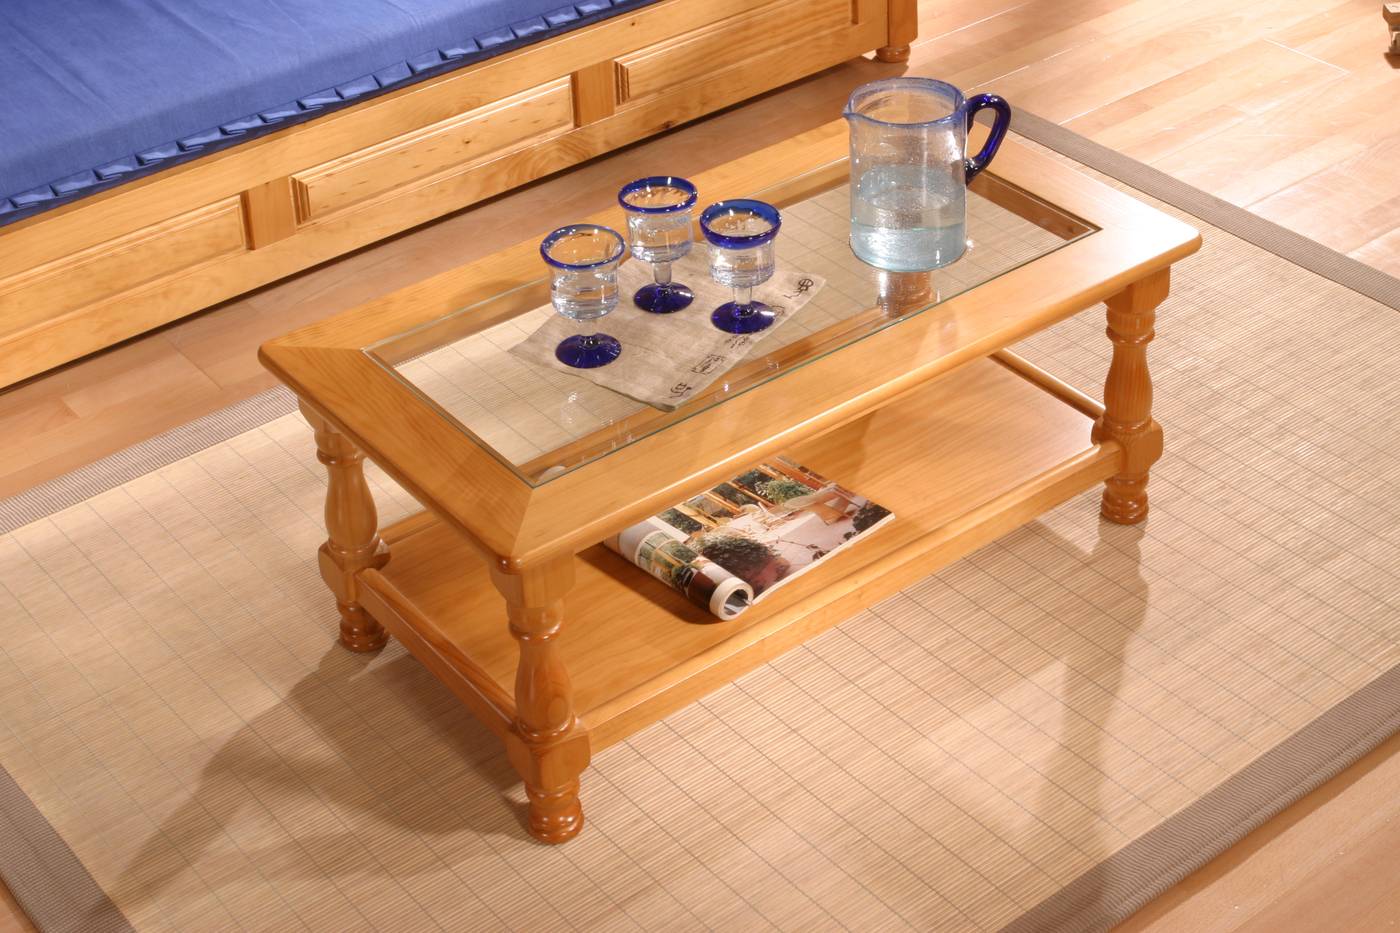 Mesa de centro rectangular de madera de pino, con revistero y tapa de cristal. Disponible en varios colores.